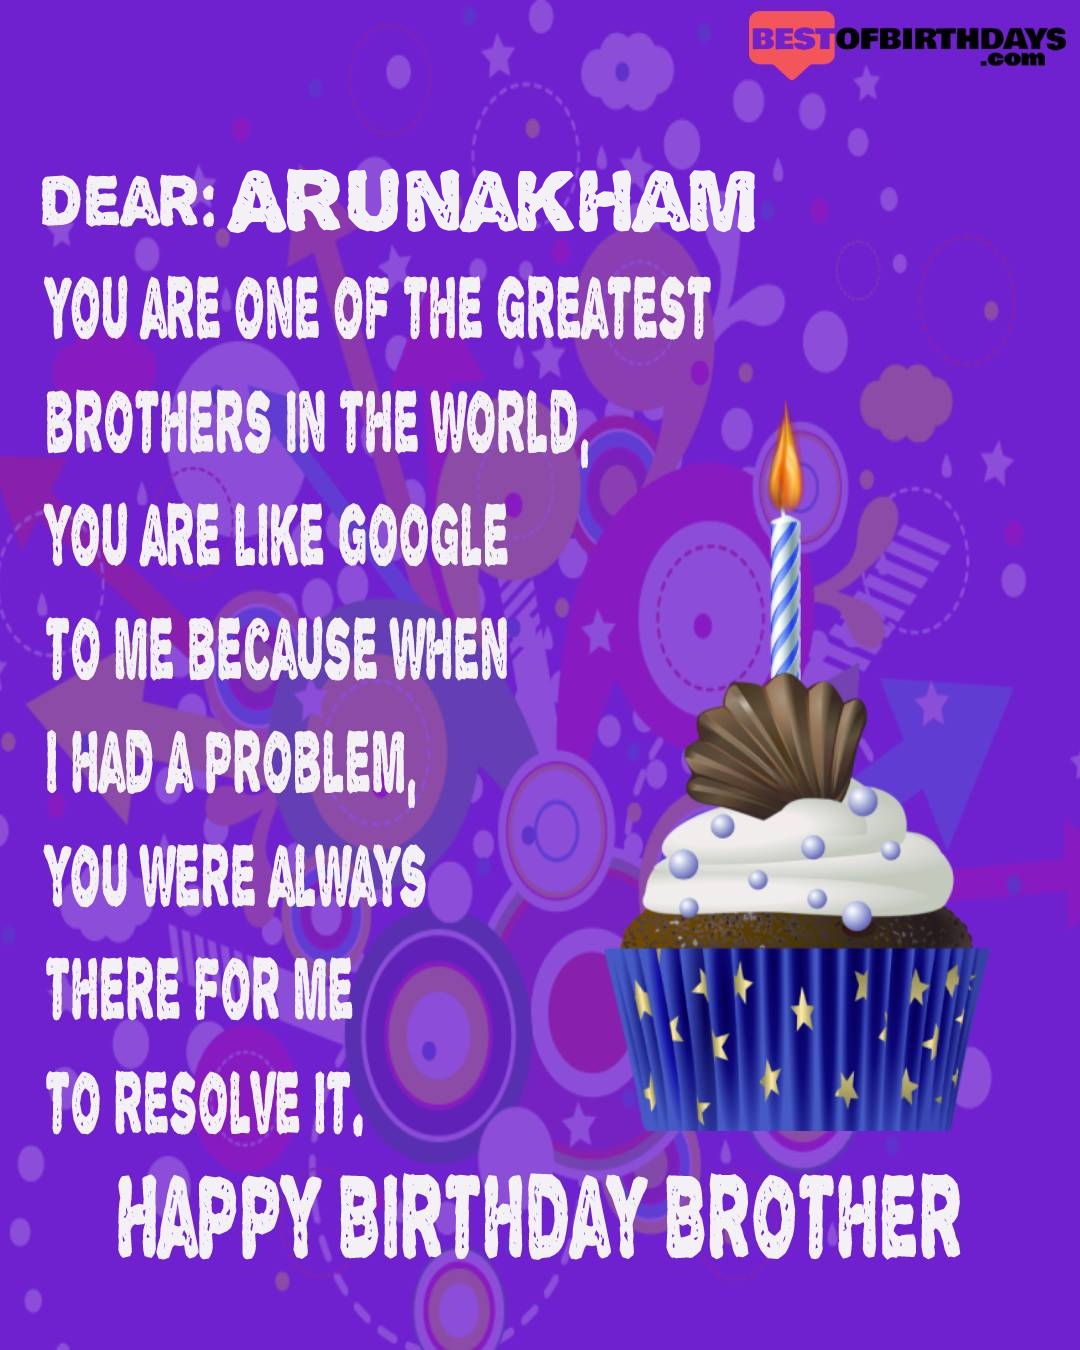 Happy birthday arunakham bhai brother bro